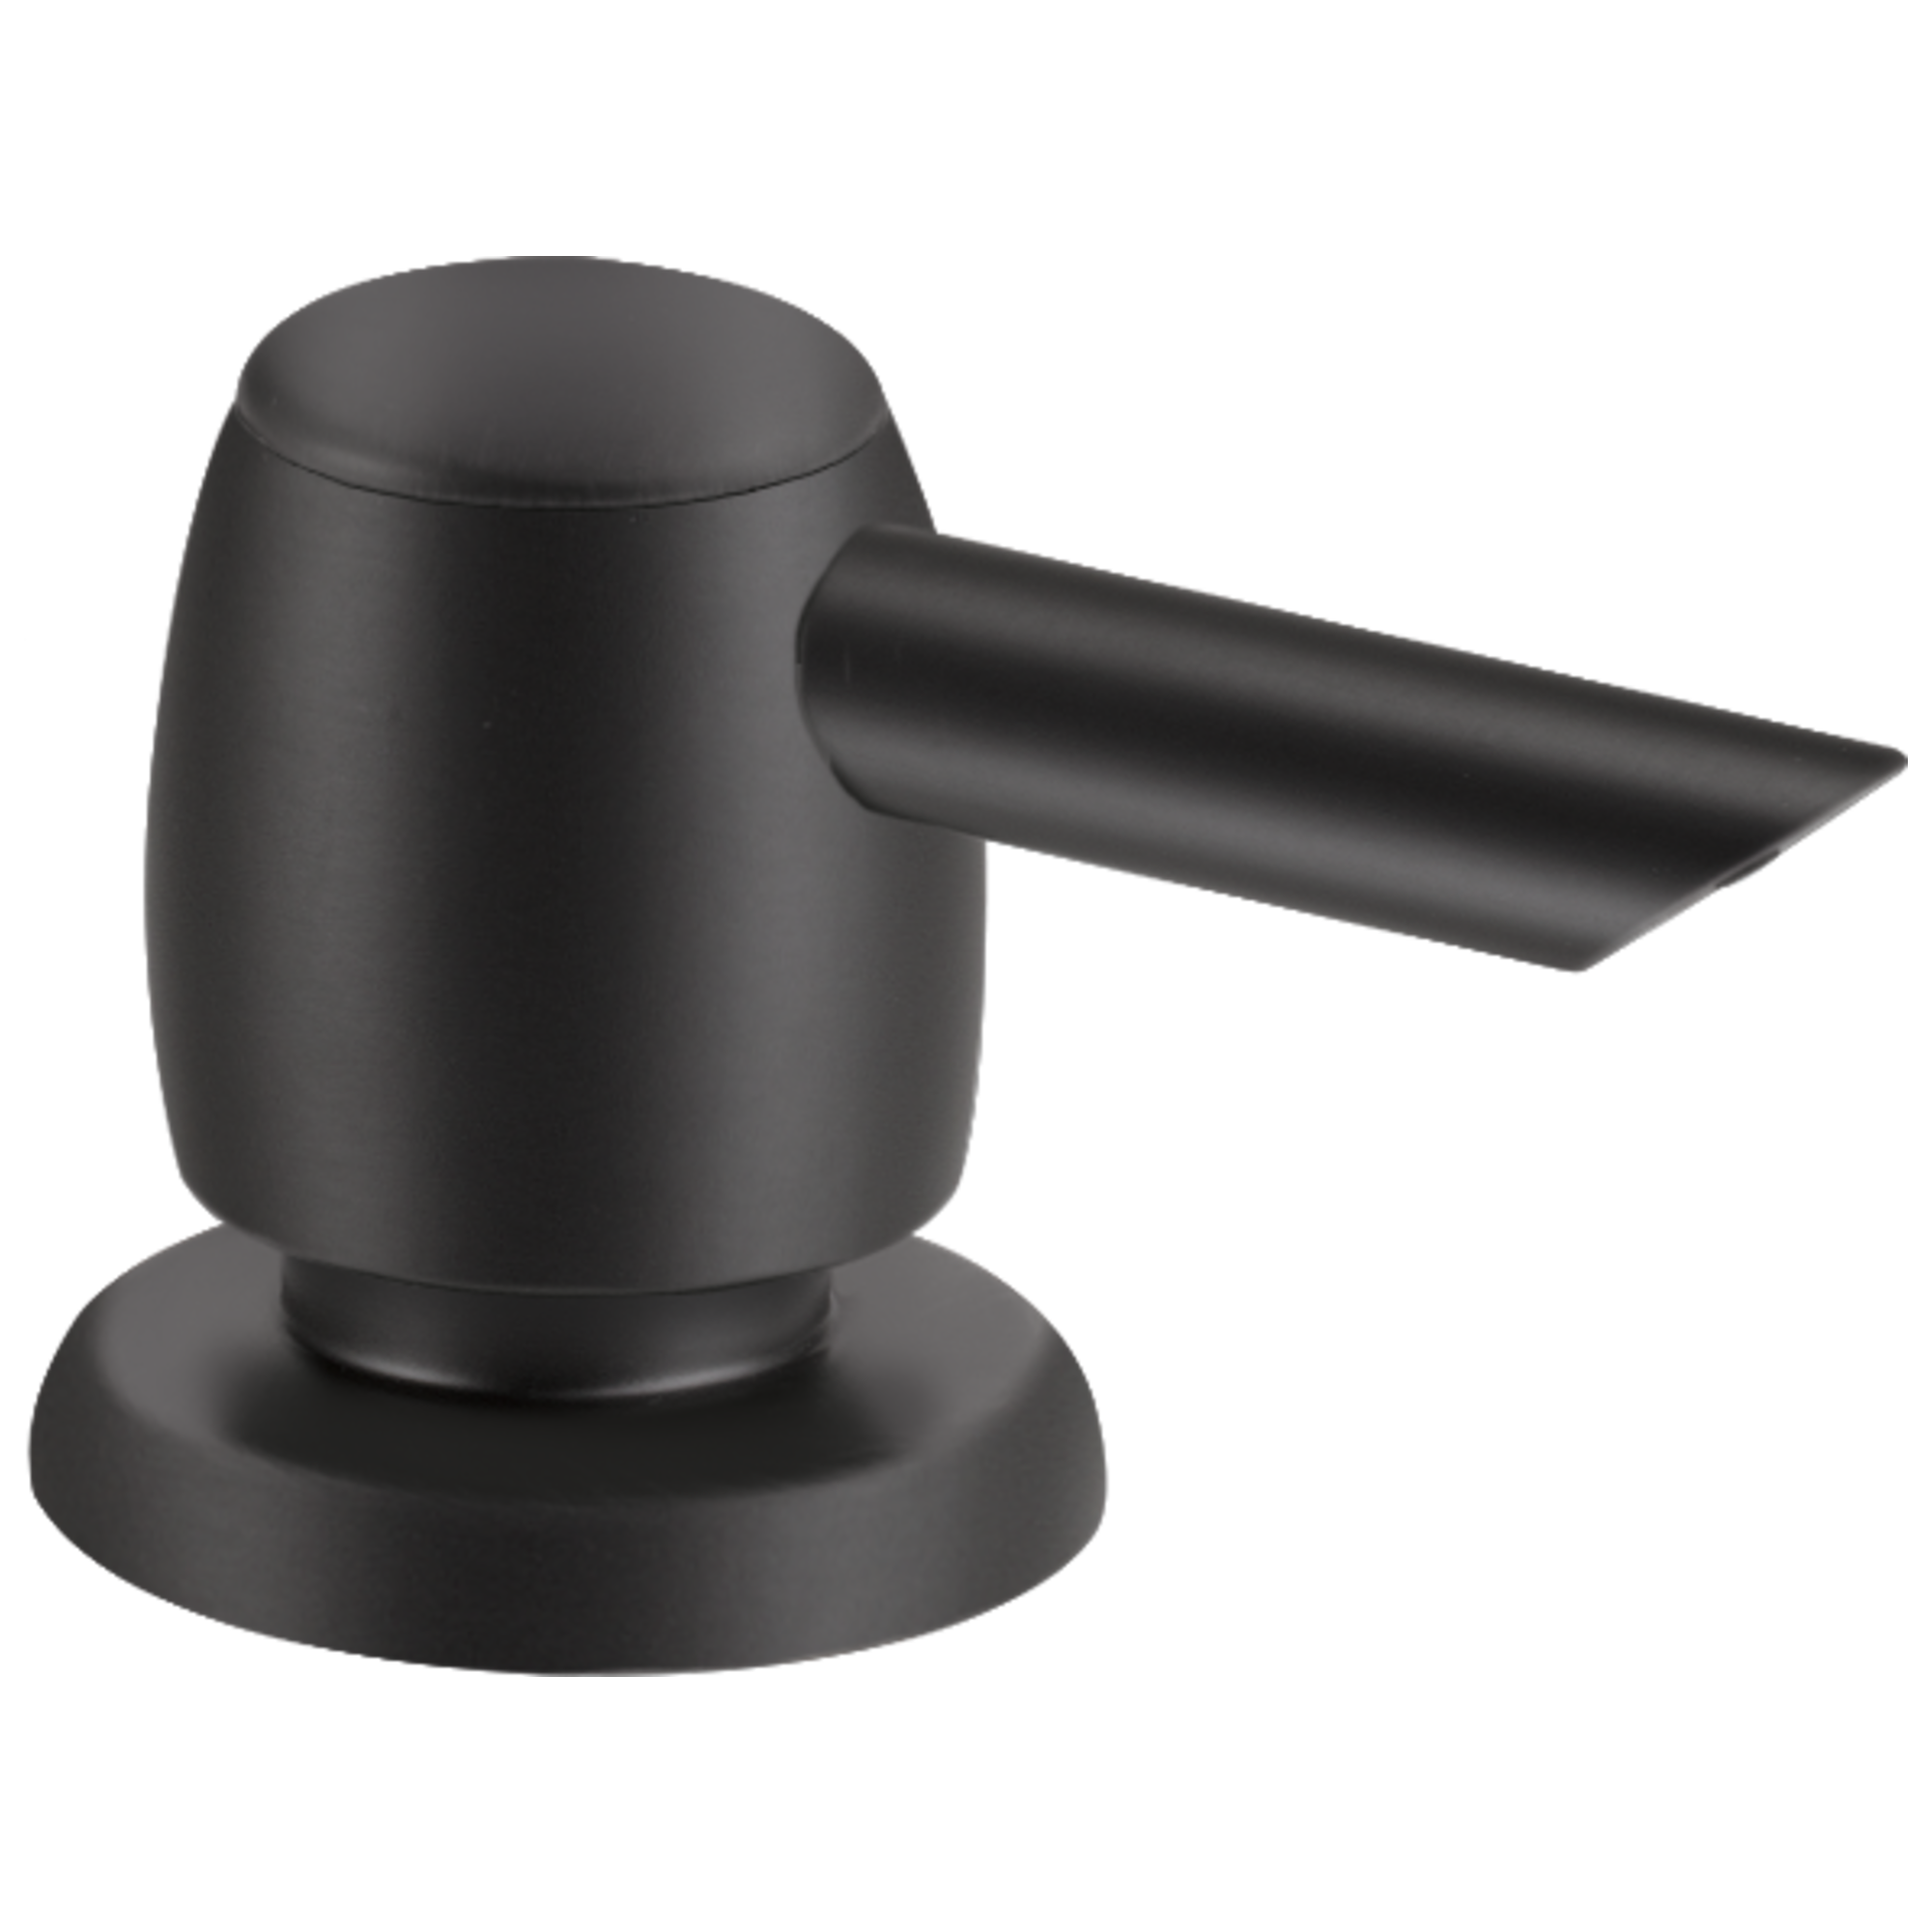 Delta Retail Channel Product: Soap / Lotion Dispenser